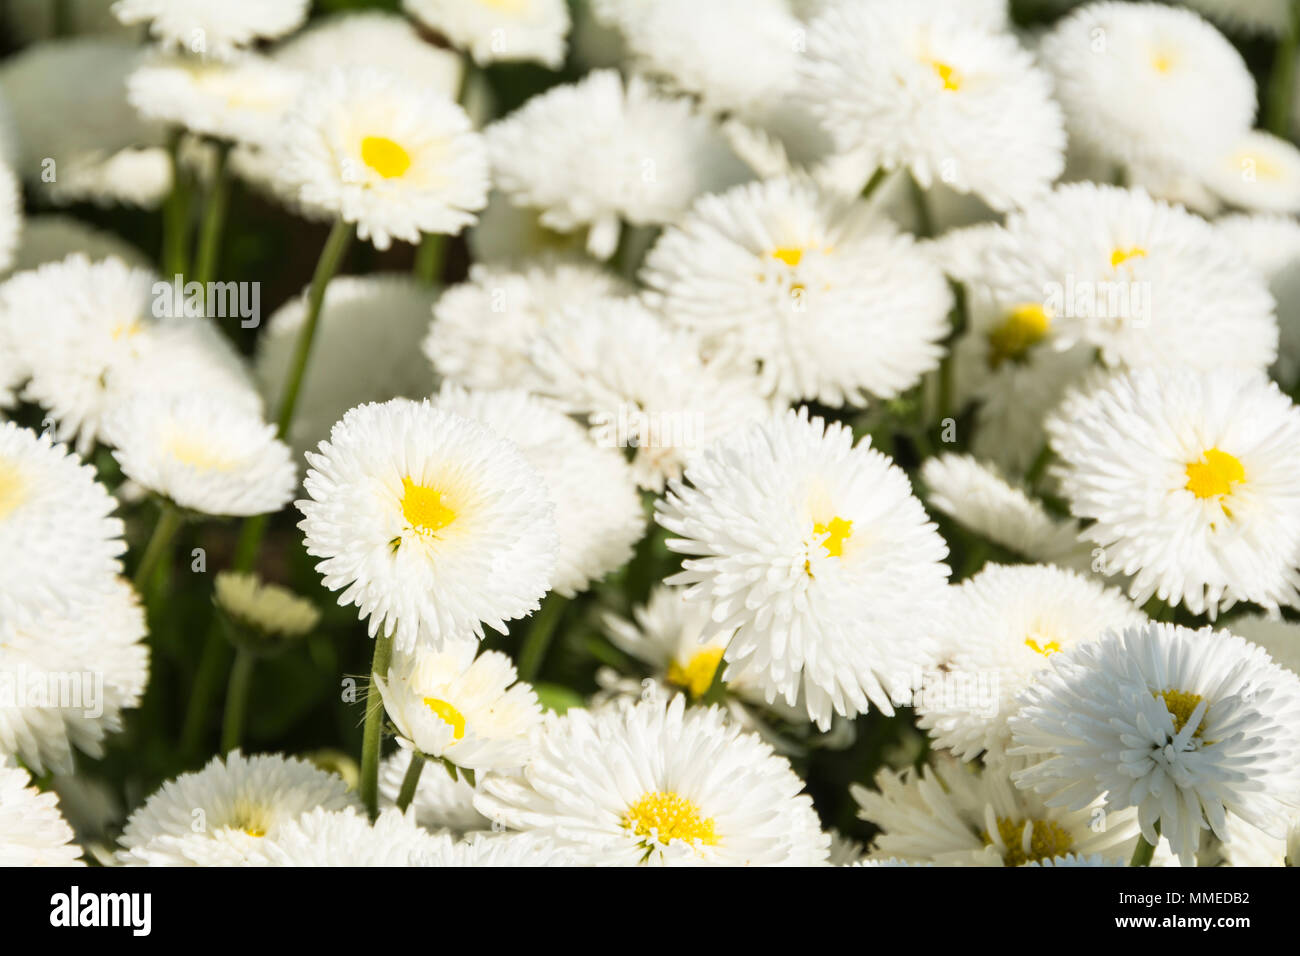 Speedstar, Bellis Perennis, White English Daisy in bloom Stock Photo